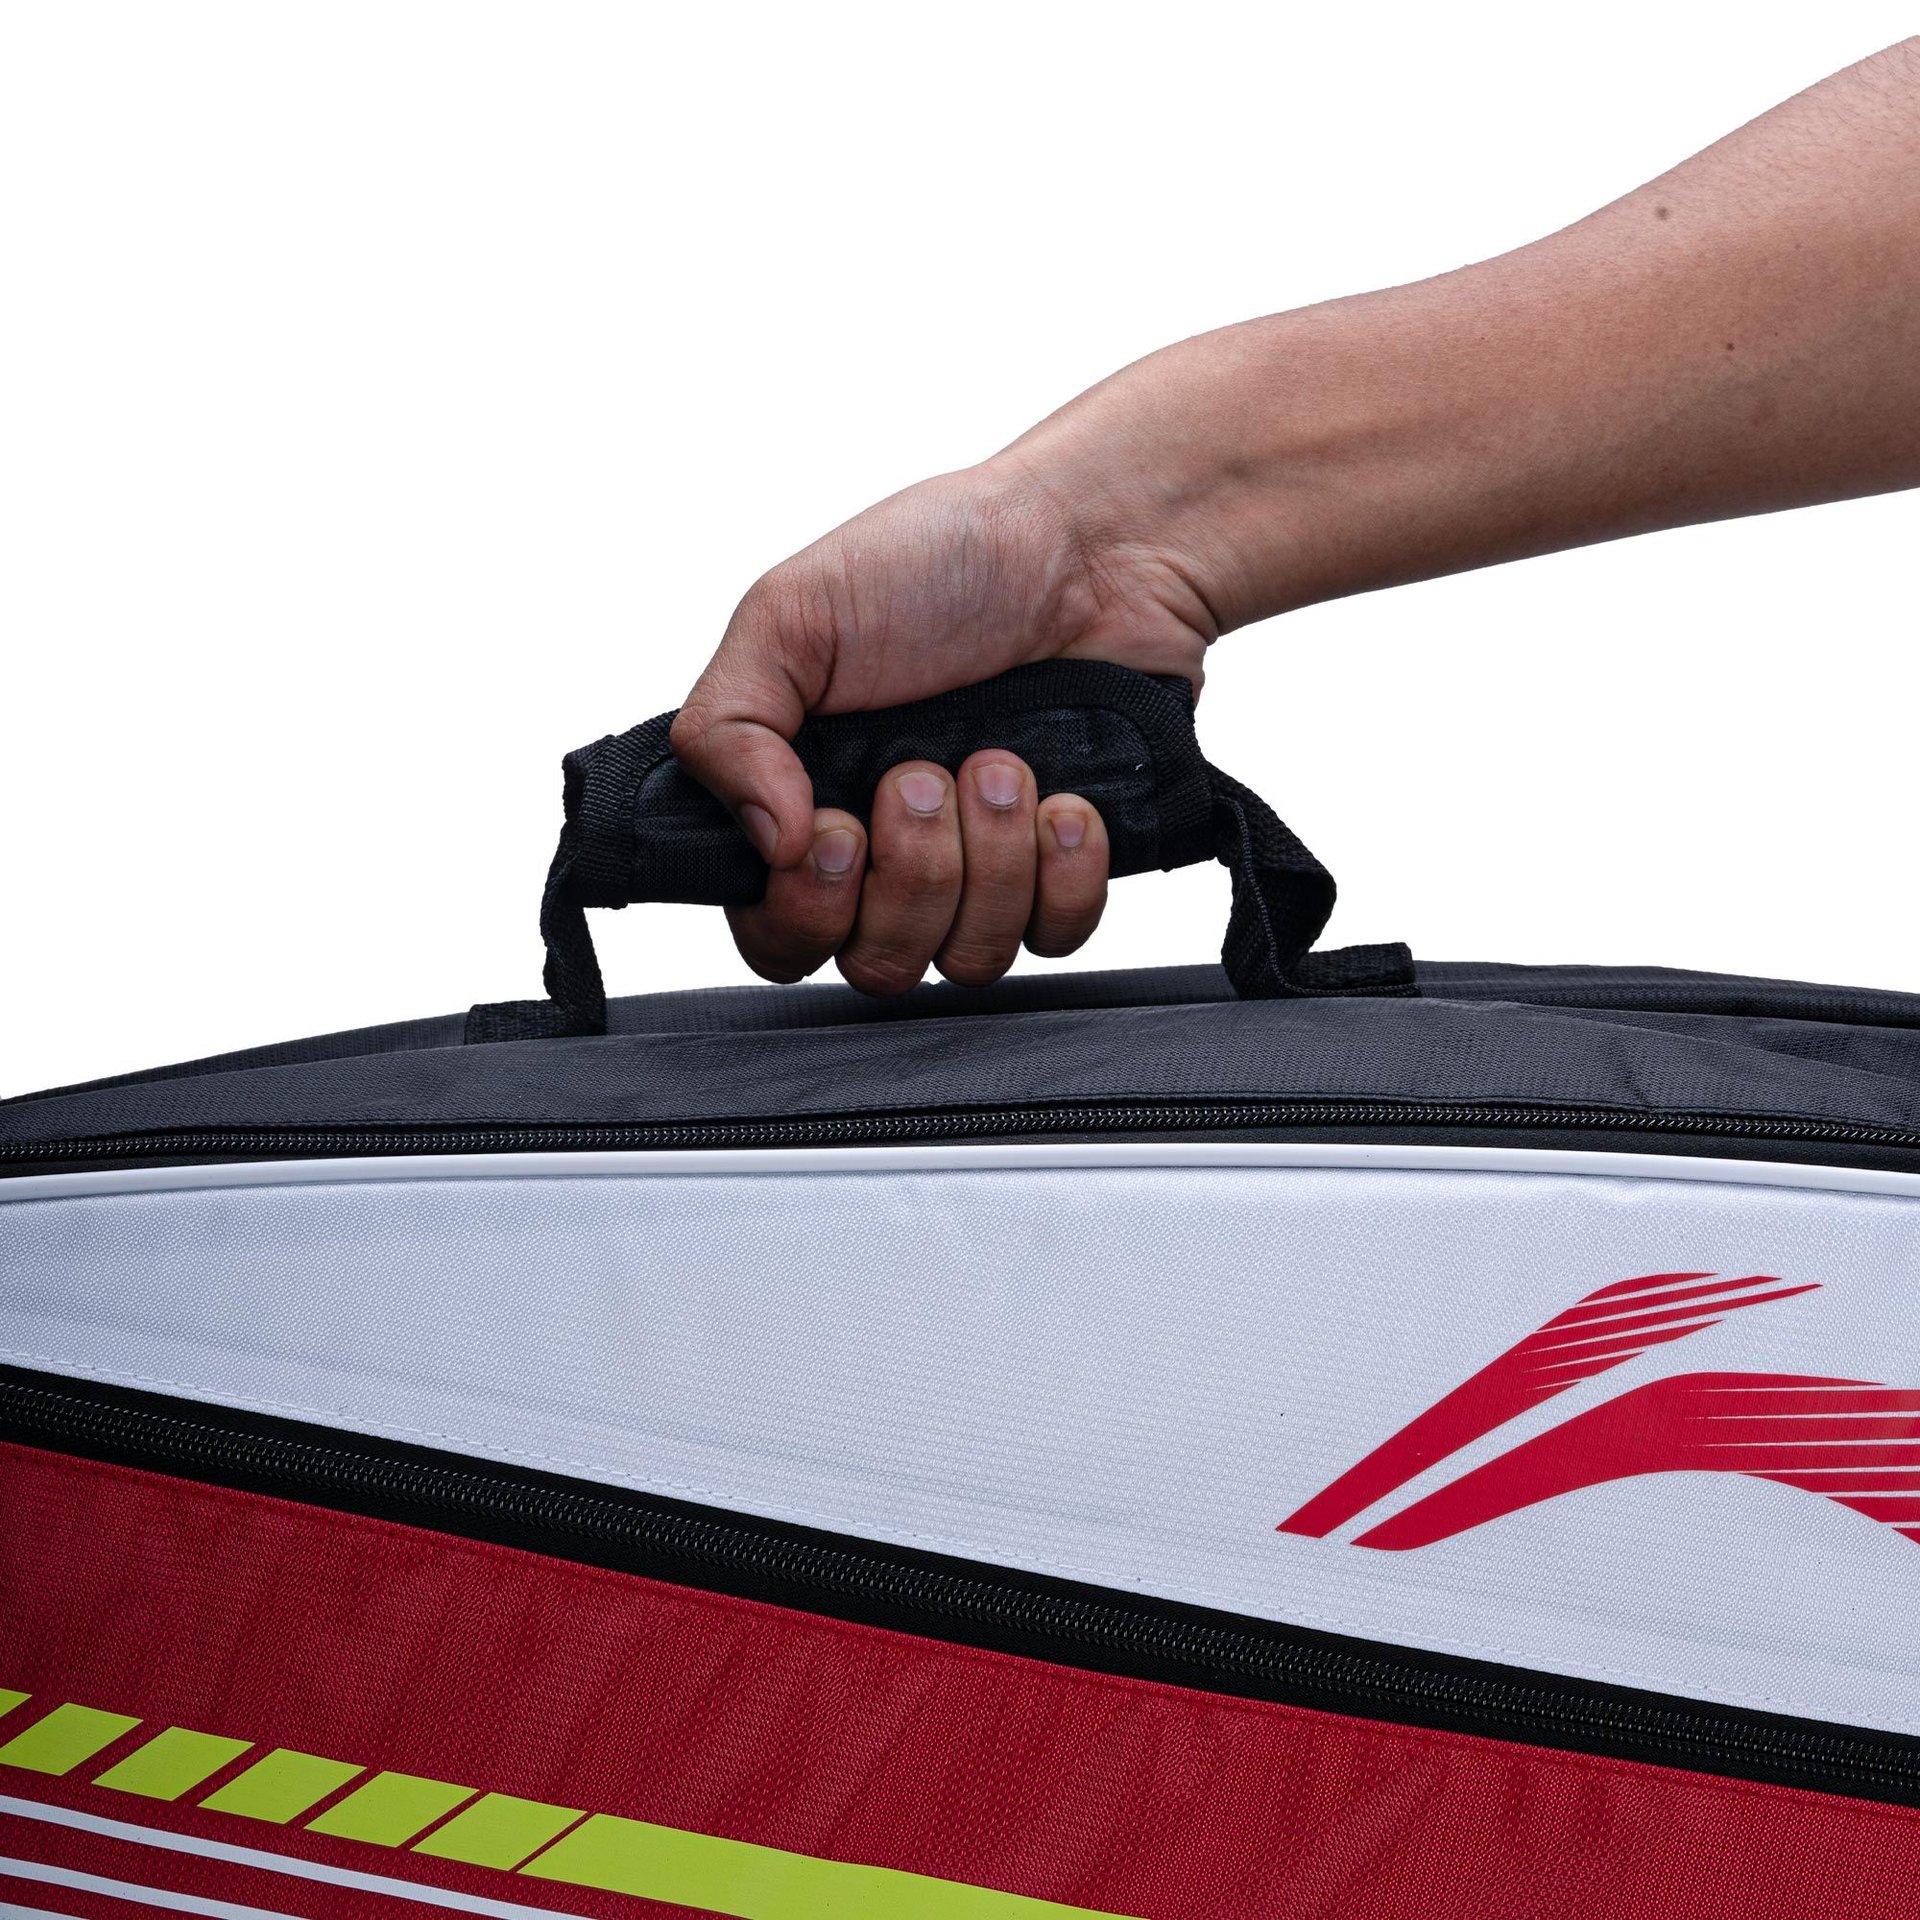 PaceCraft Badminton Kit Bag - Carry Handle